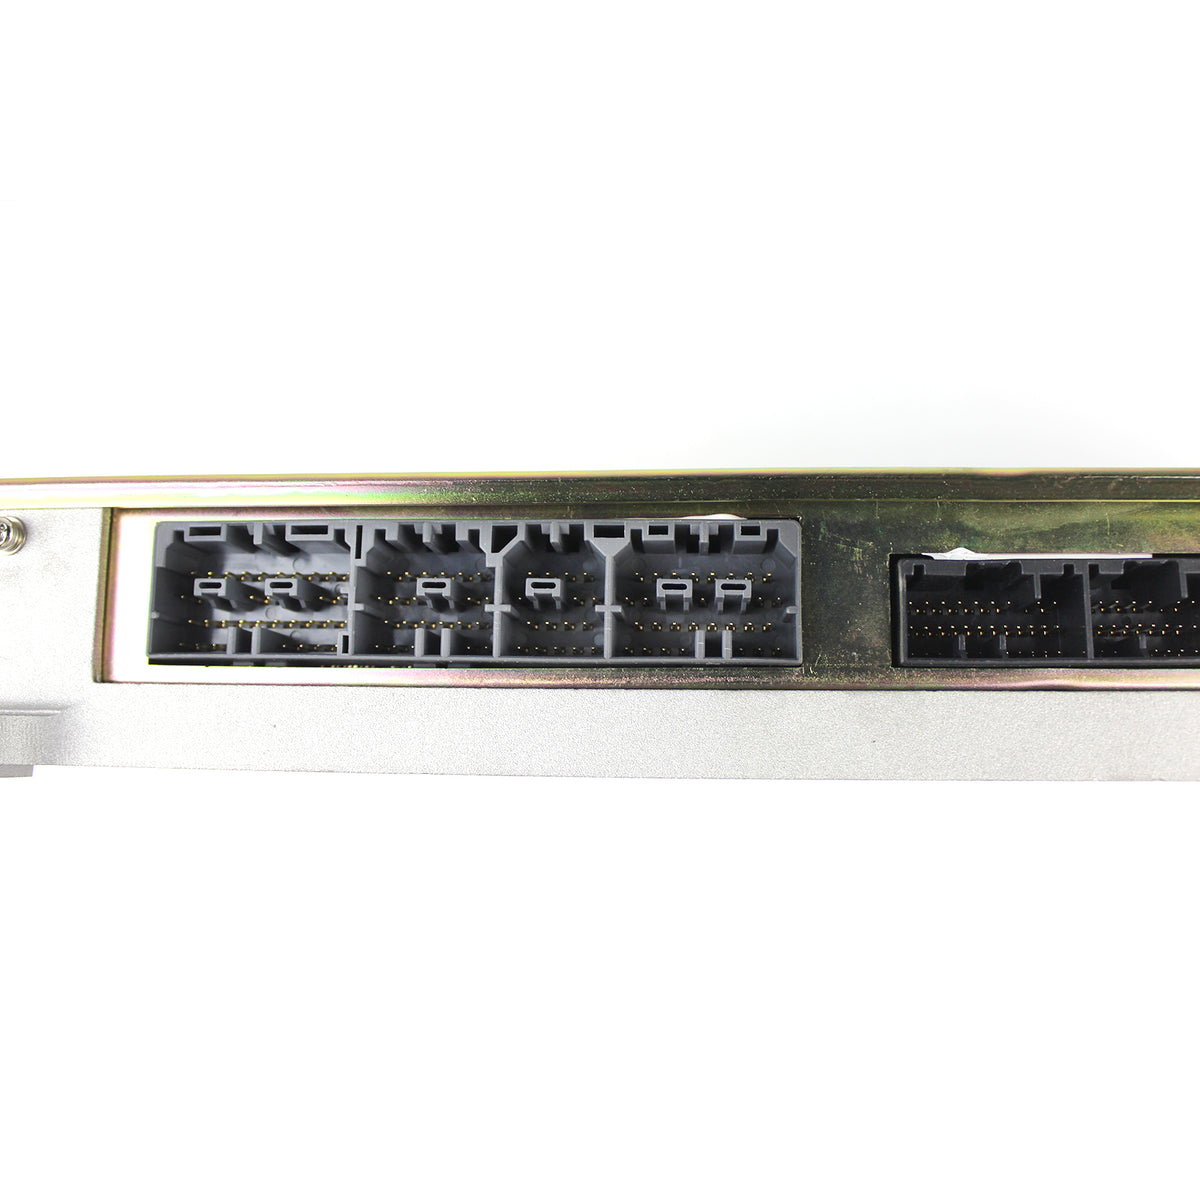 YN22E00285F1 Controller for Kobelco SK200-8 Newholland E215B